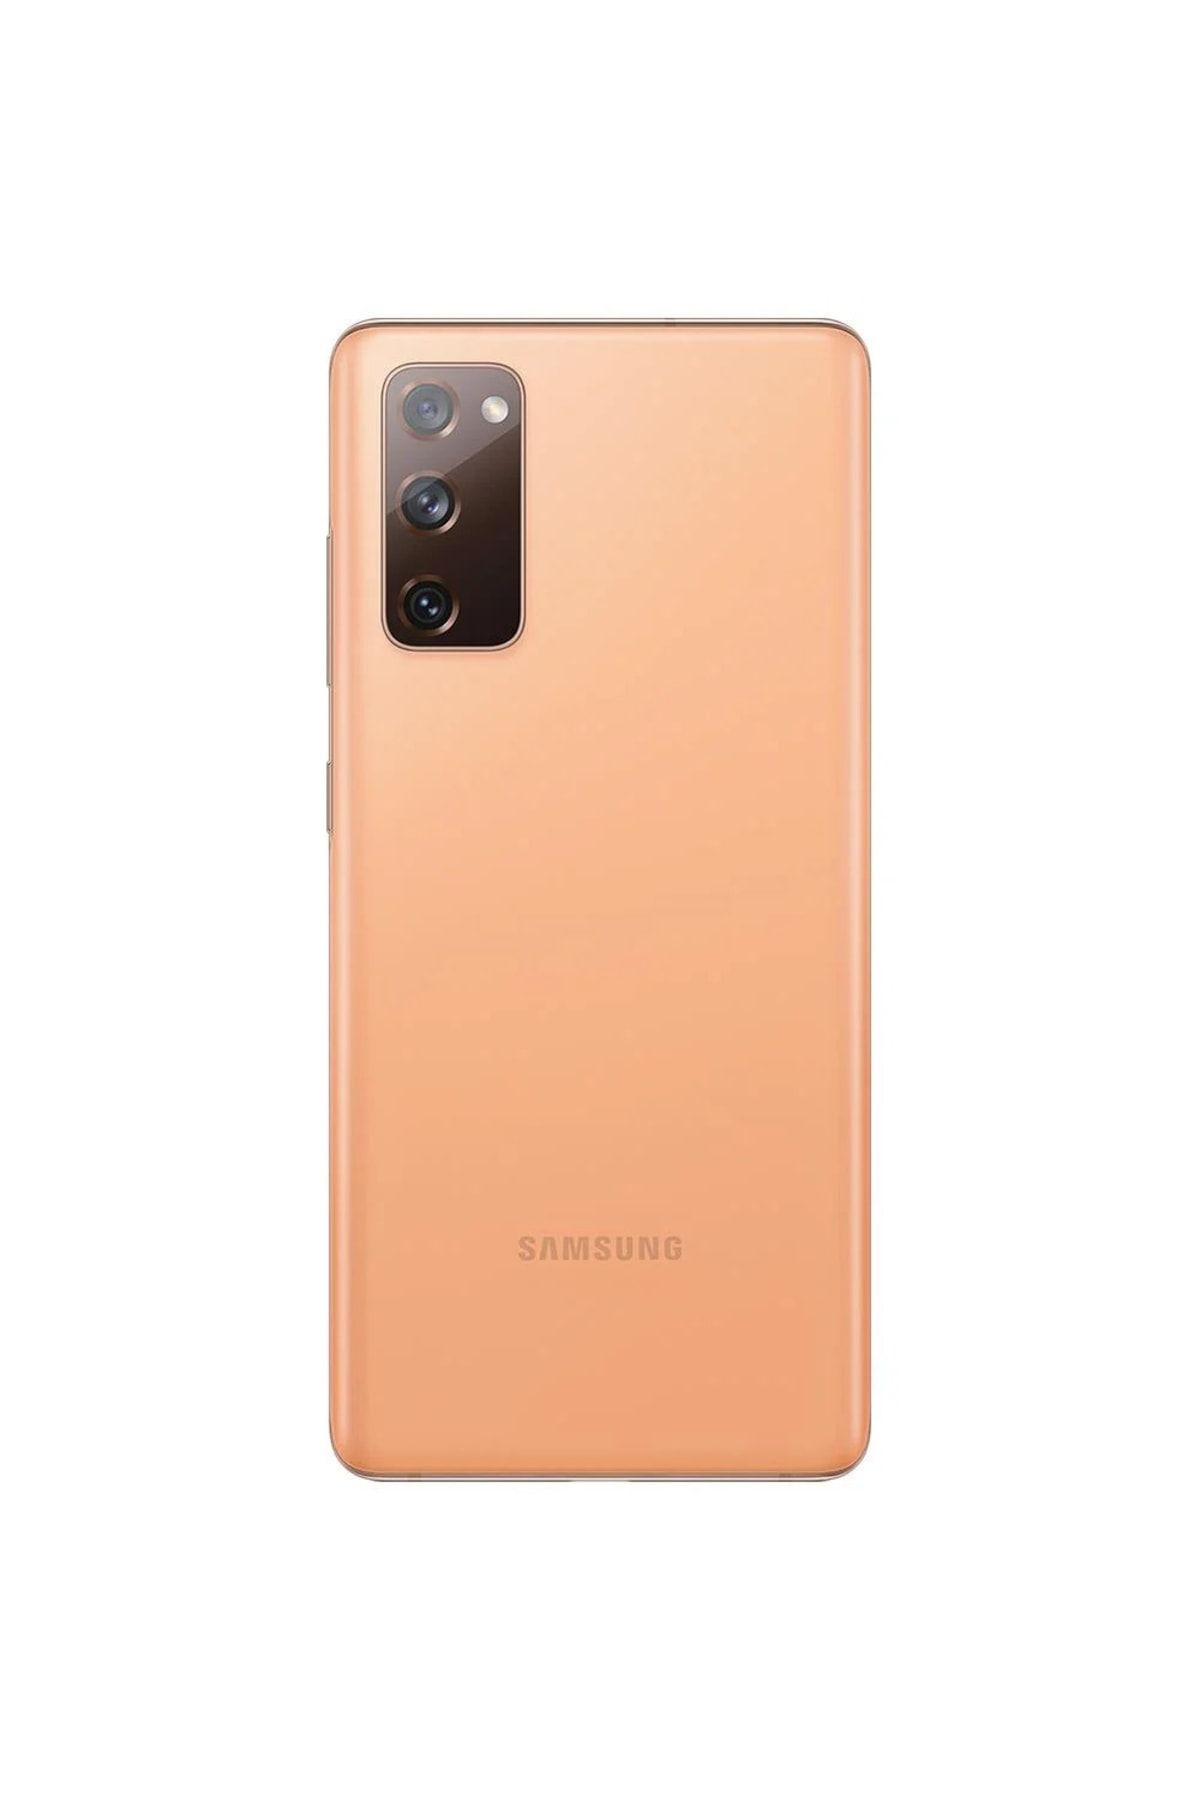 Samsung Yenilenmiş Galaxy S20 Fe 128 Gb 12 Ay Garantili Orange